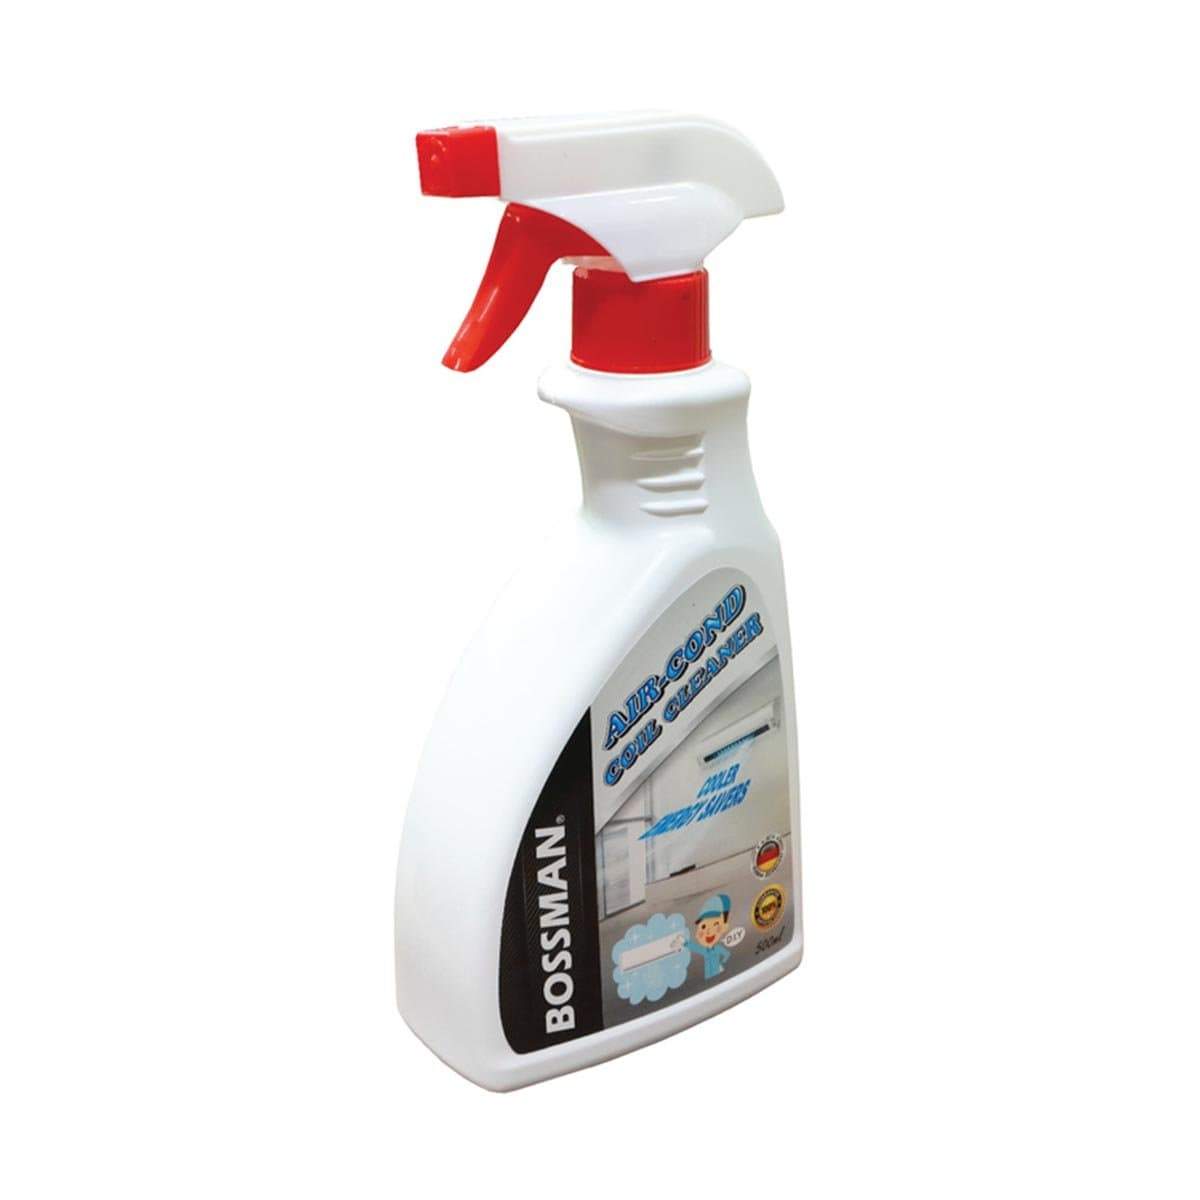 BOSSMAN Air-Conditioner Cleaner Spray 500ml - OfficePlus